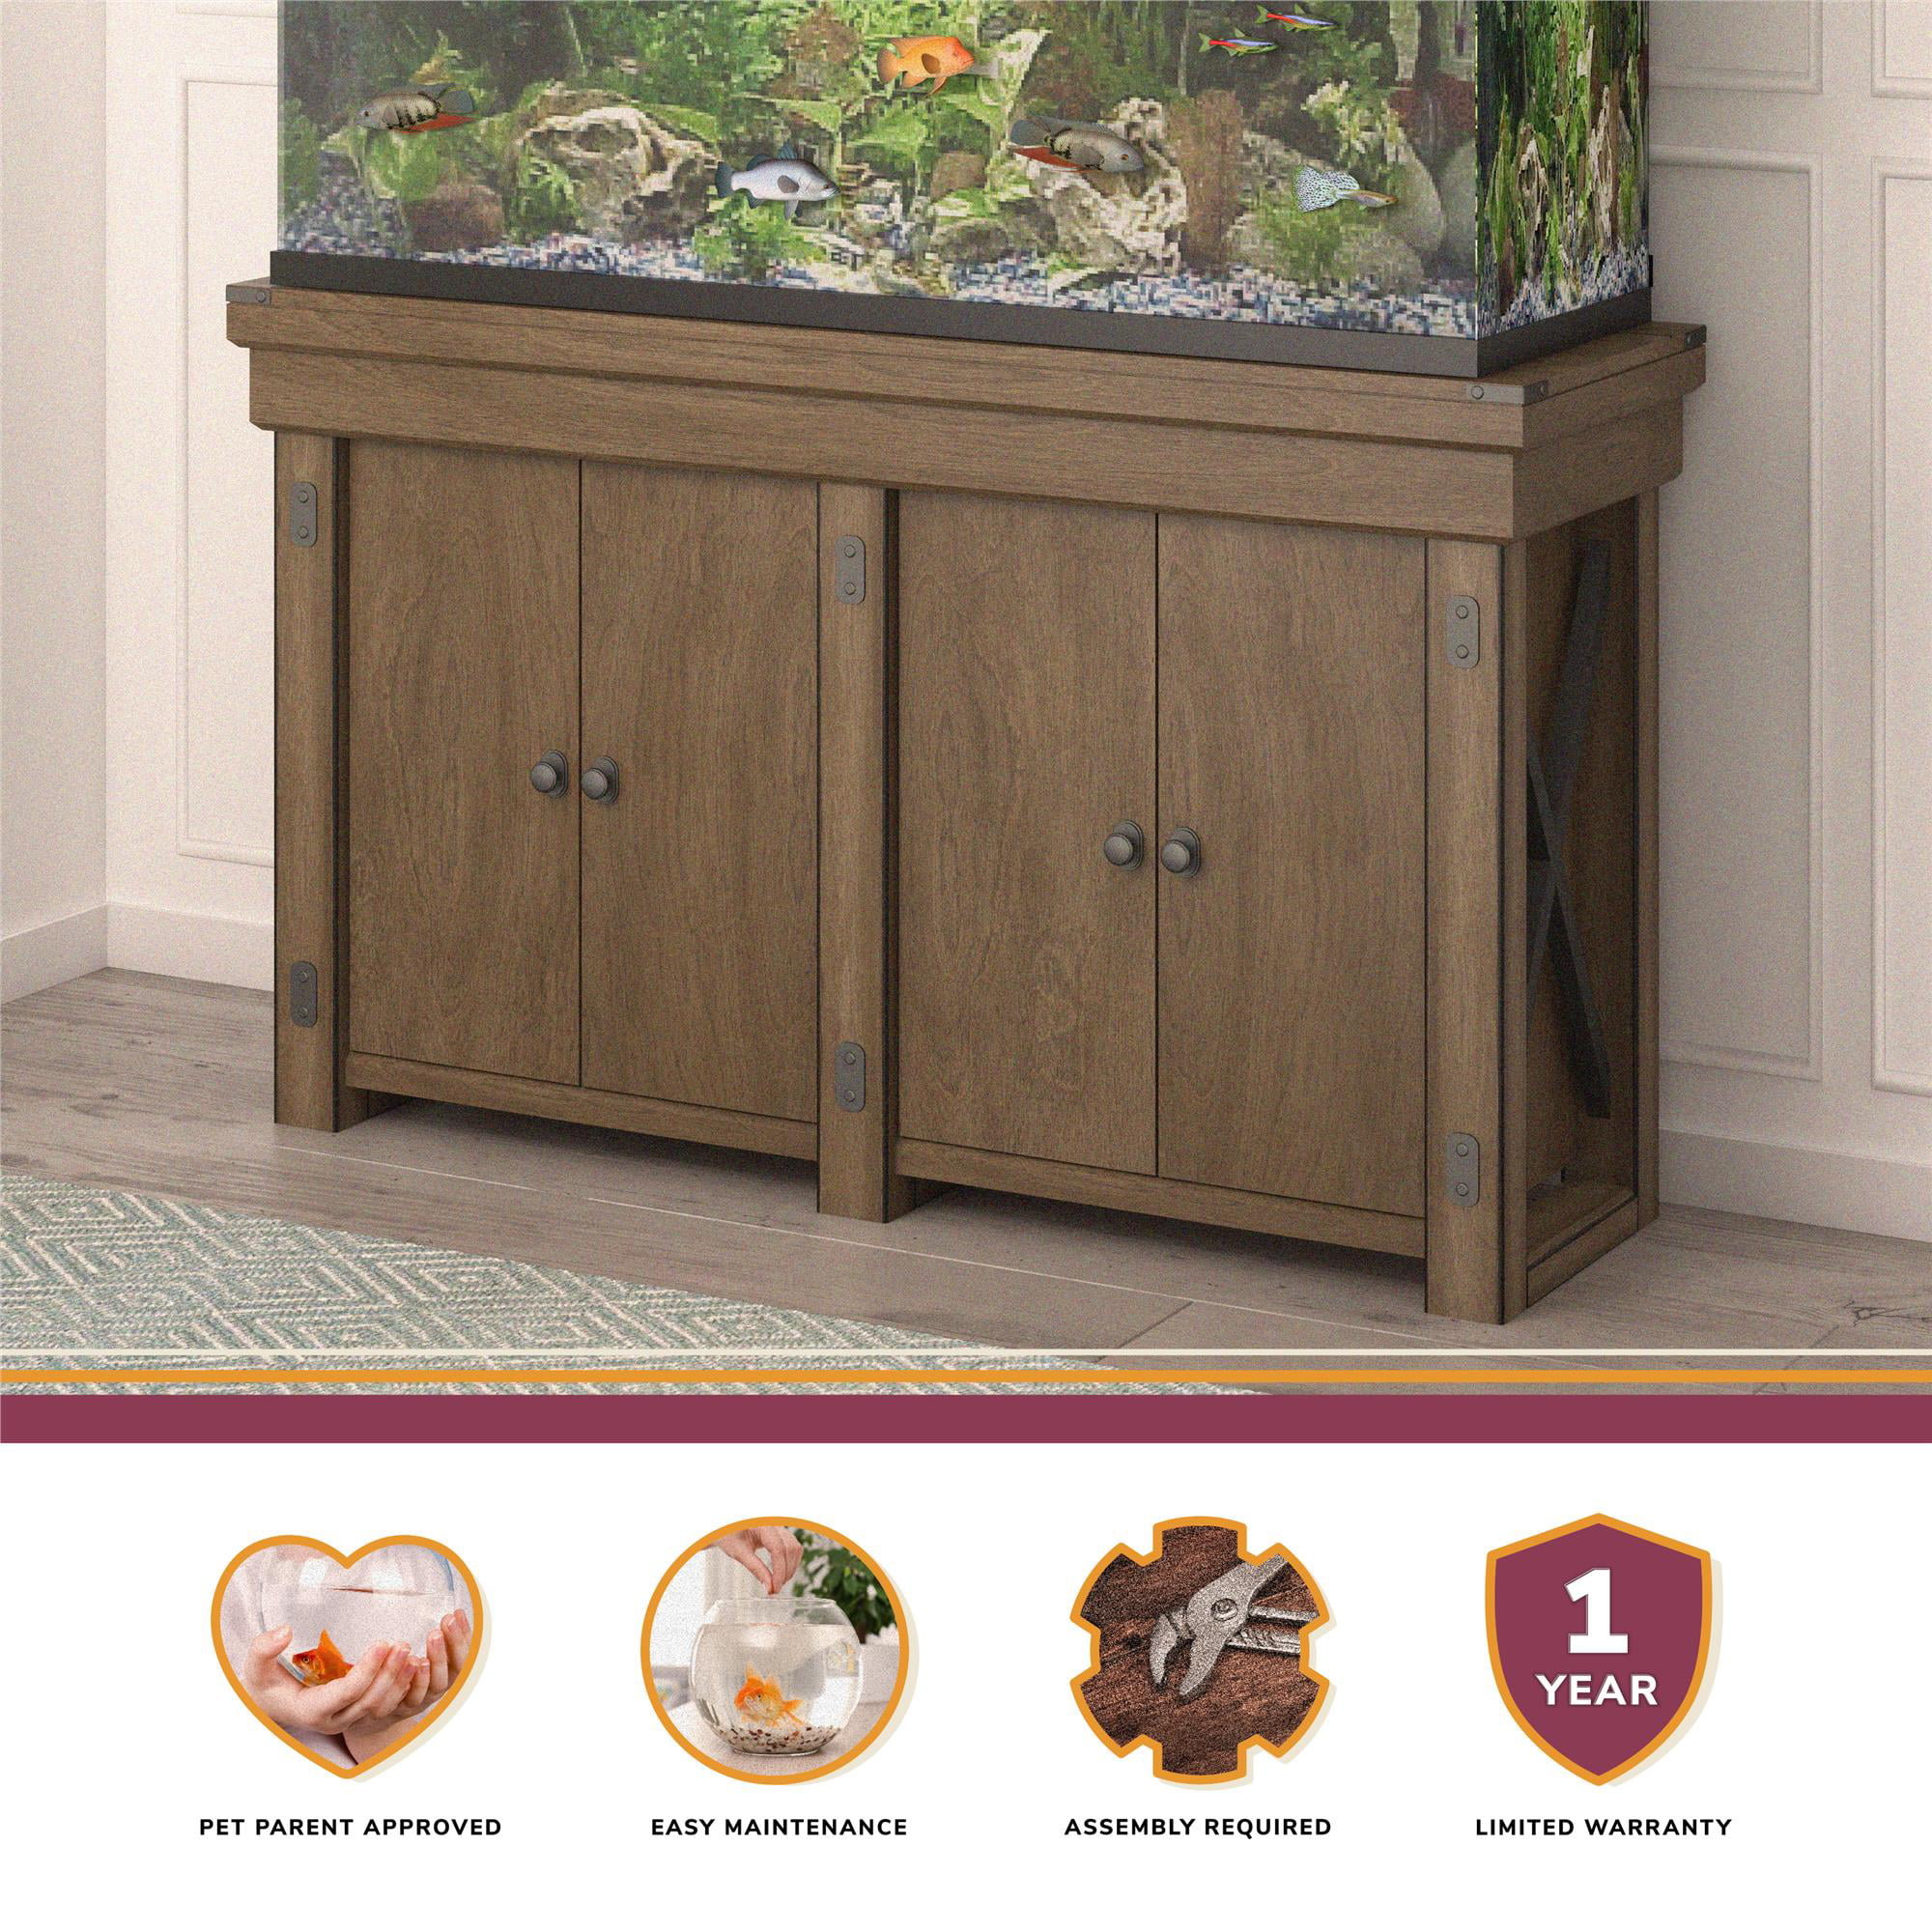 Deluxe 55 Gallon Aquarium Stand Storage Cabinet Fish Tank Holder Cherry Brown 